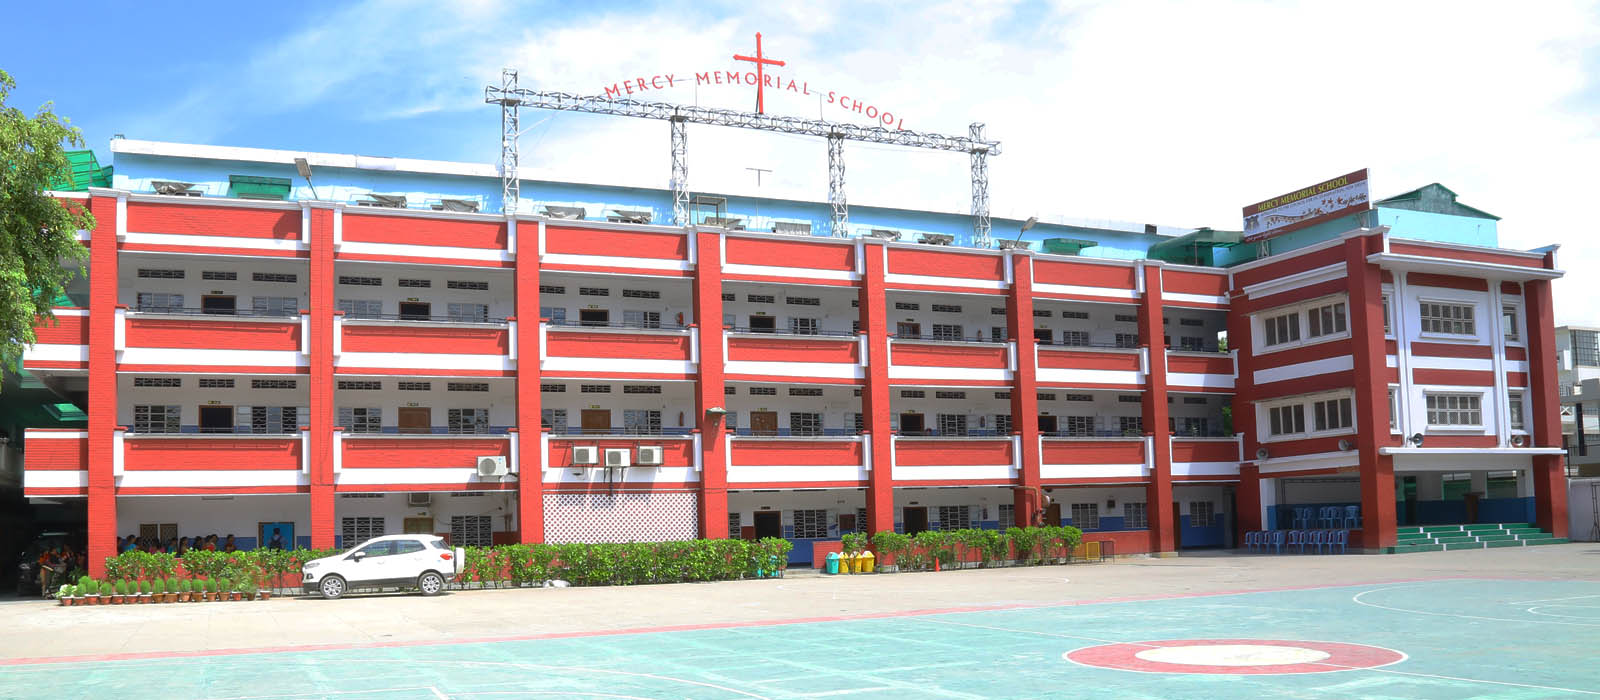 Mercy Memorial School, Kidwai Nagar, Kanpur